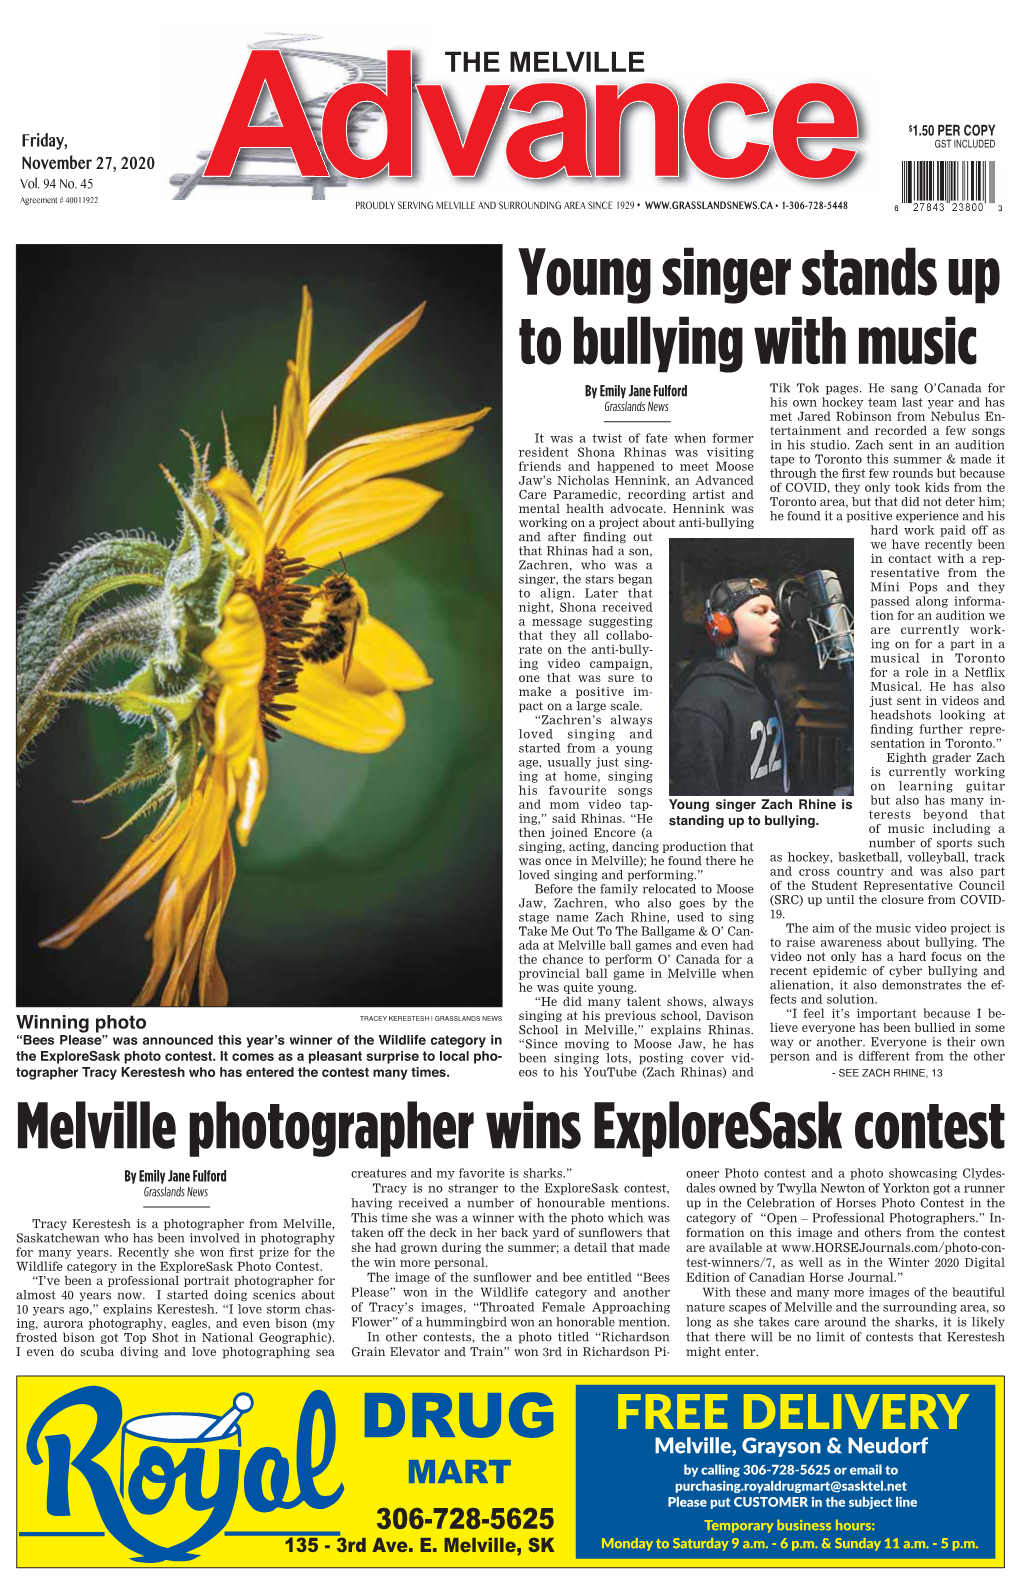 Melville Photographer Wins Exploresask Contest Young Singer